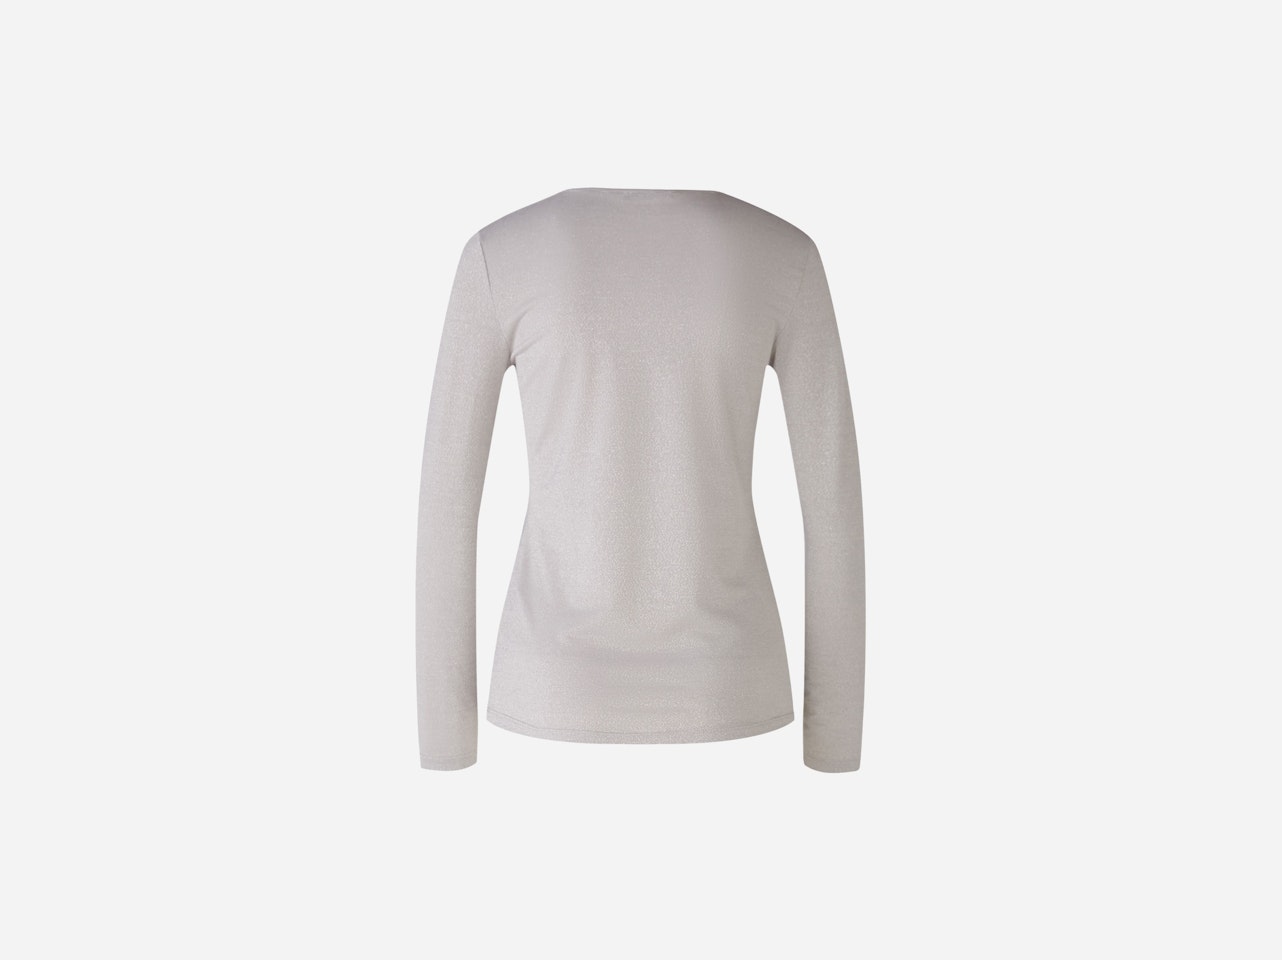 Bild 7 von Long-sleeved shirt viscose glossy blend in light grey | Oui